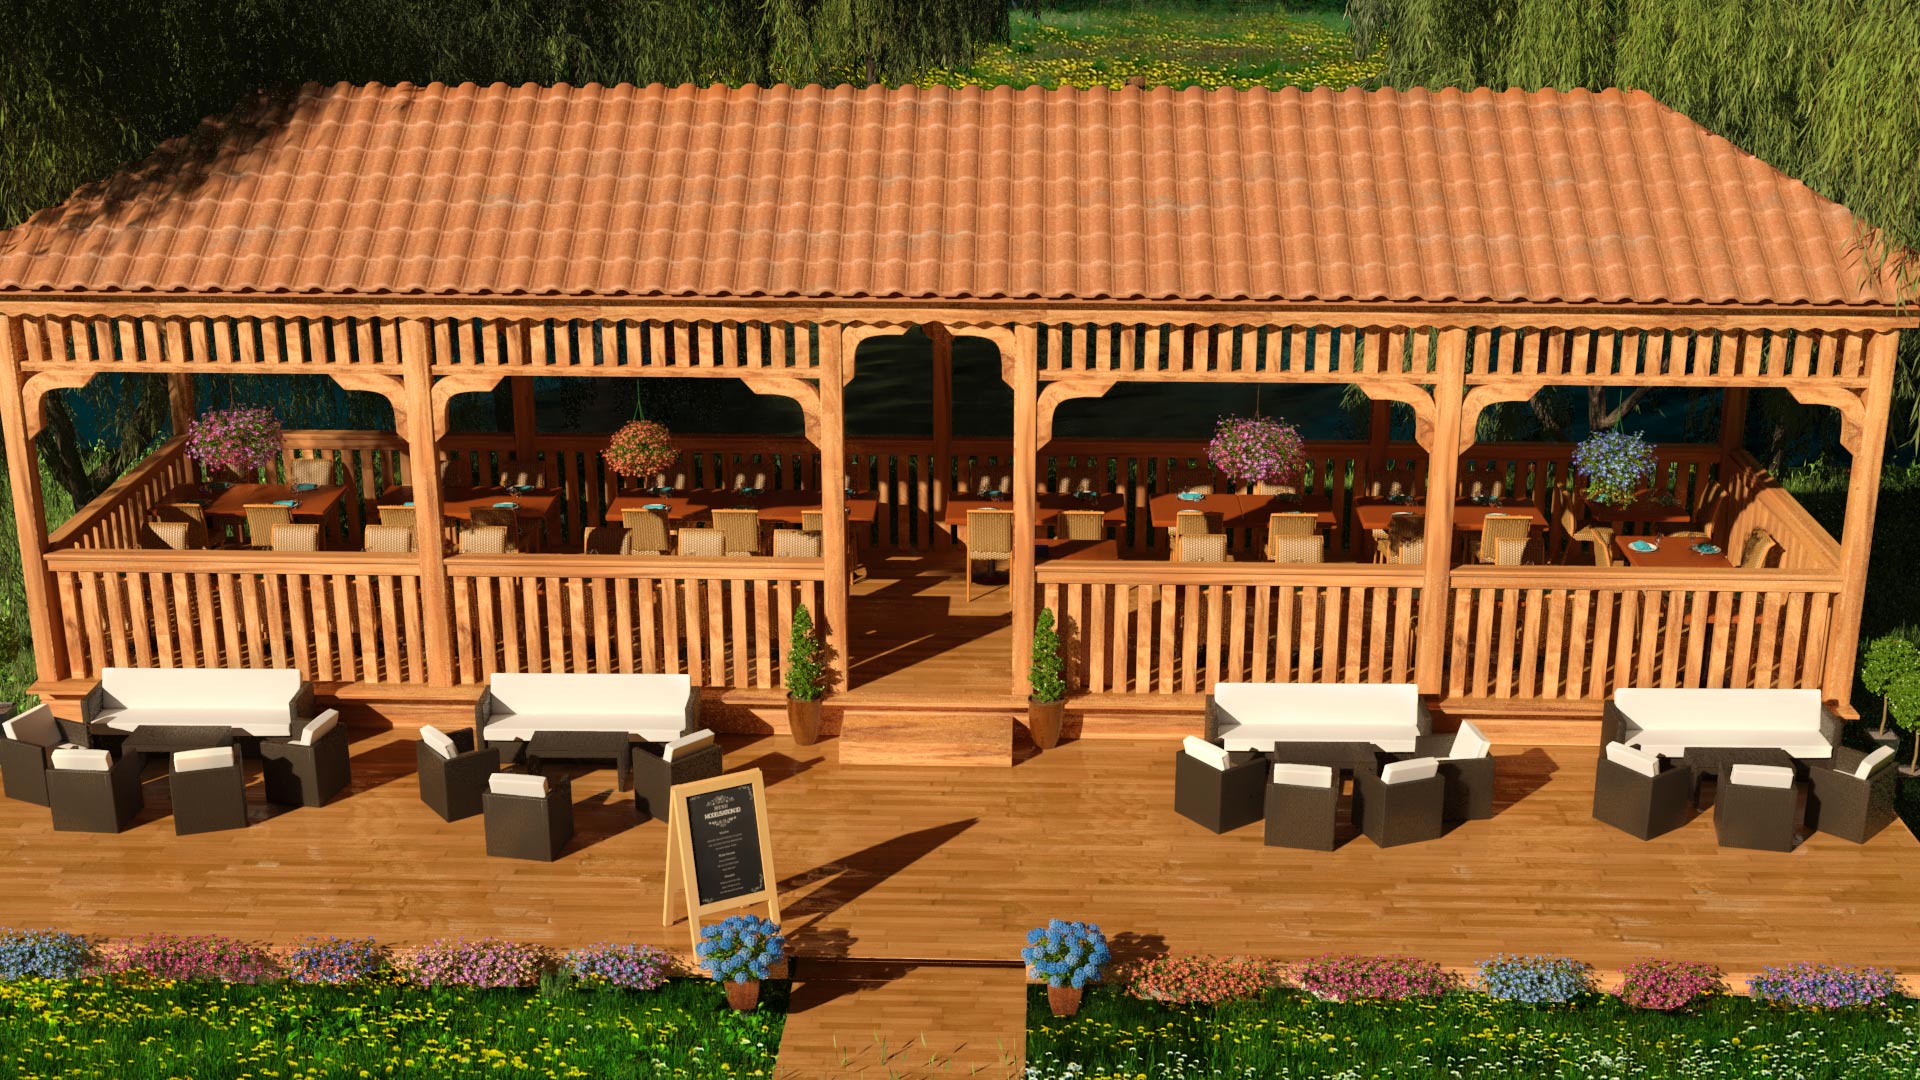 Graphiste Modélisation 3d restaurant terrasse couverte en bois